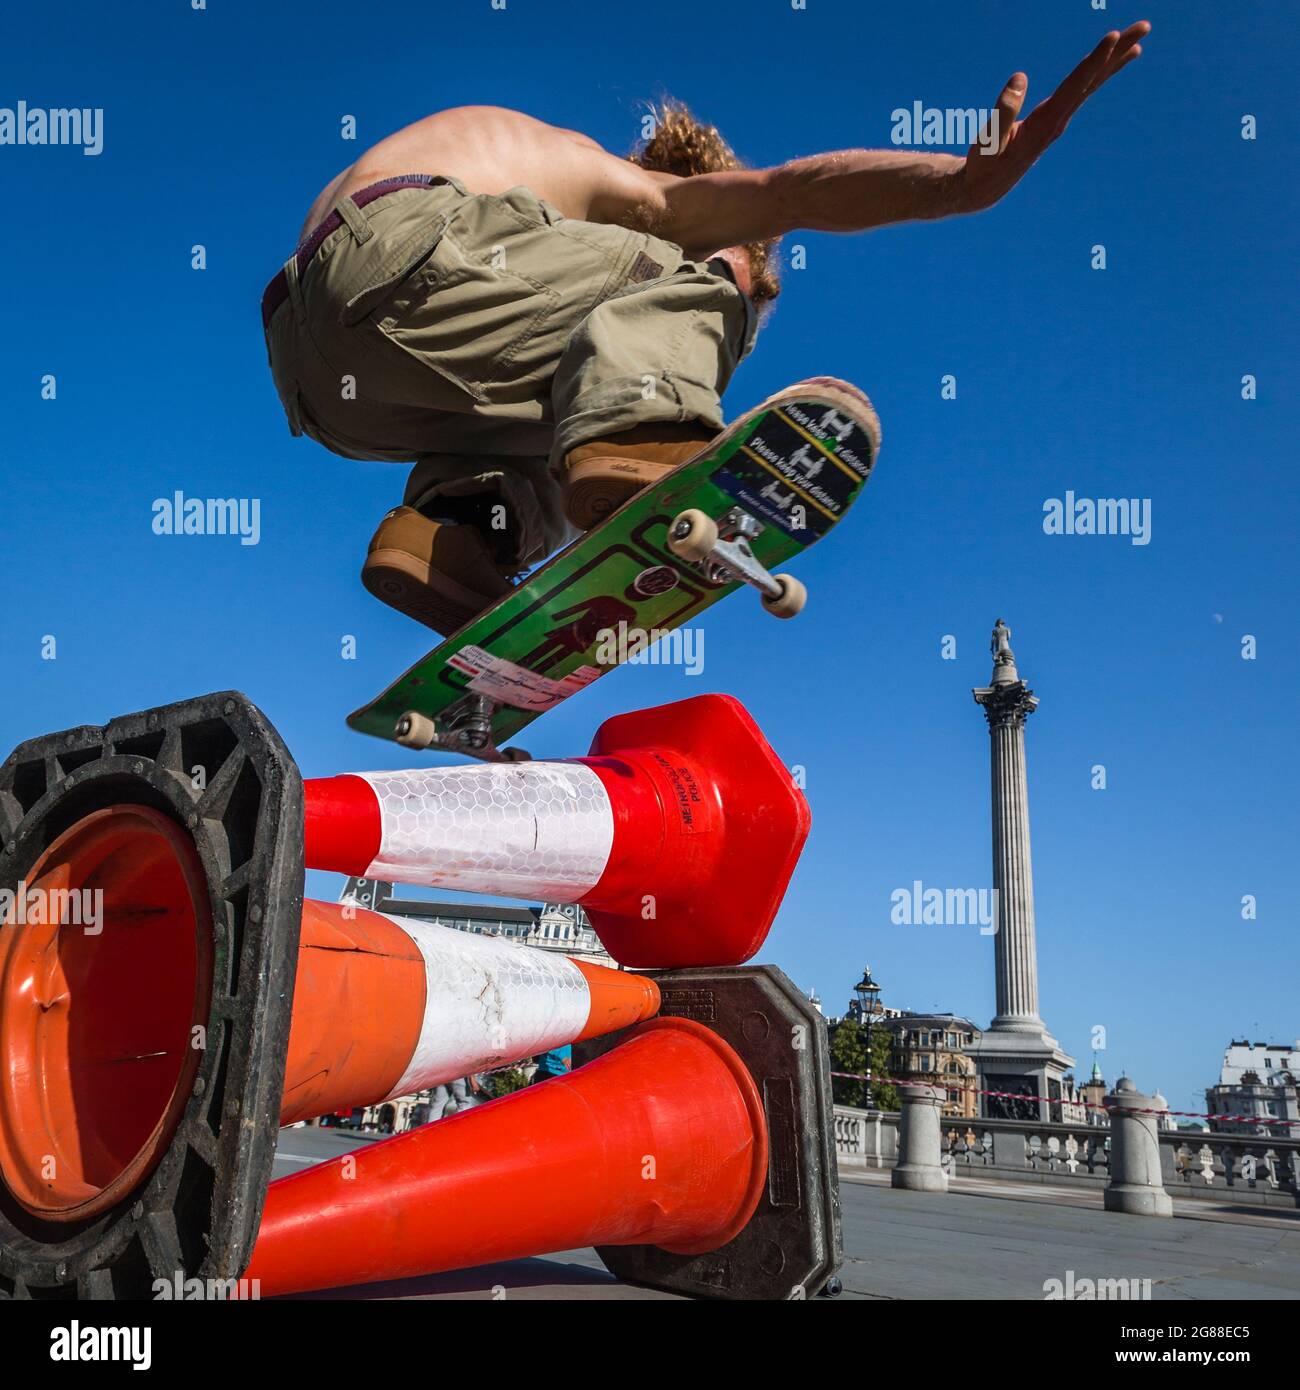 Un skateboarder survole des cônes dans Trafalgar Square. Banque D'Images